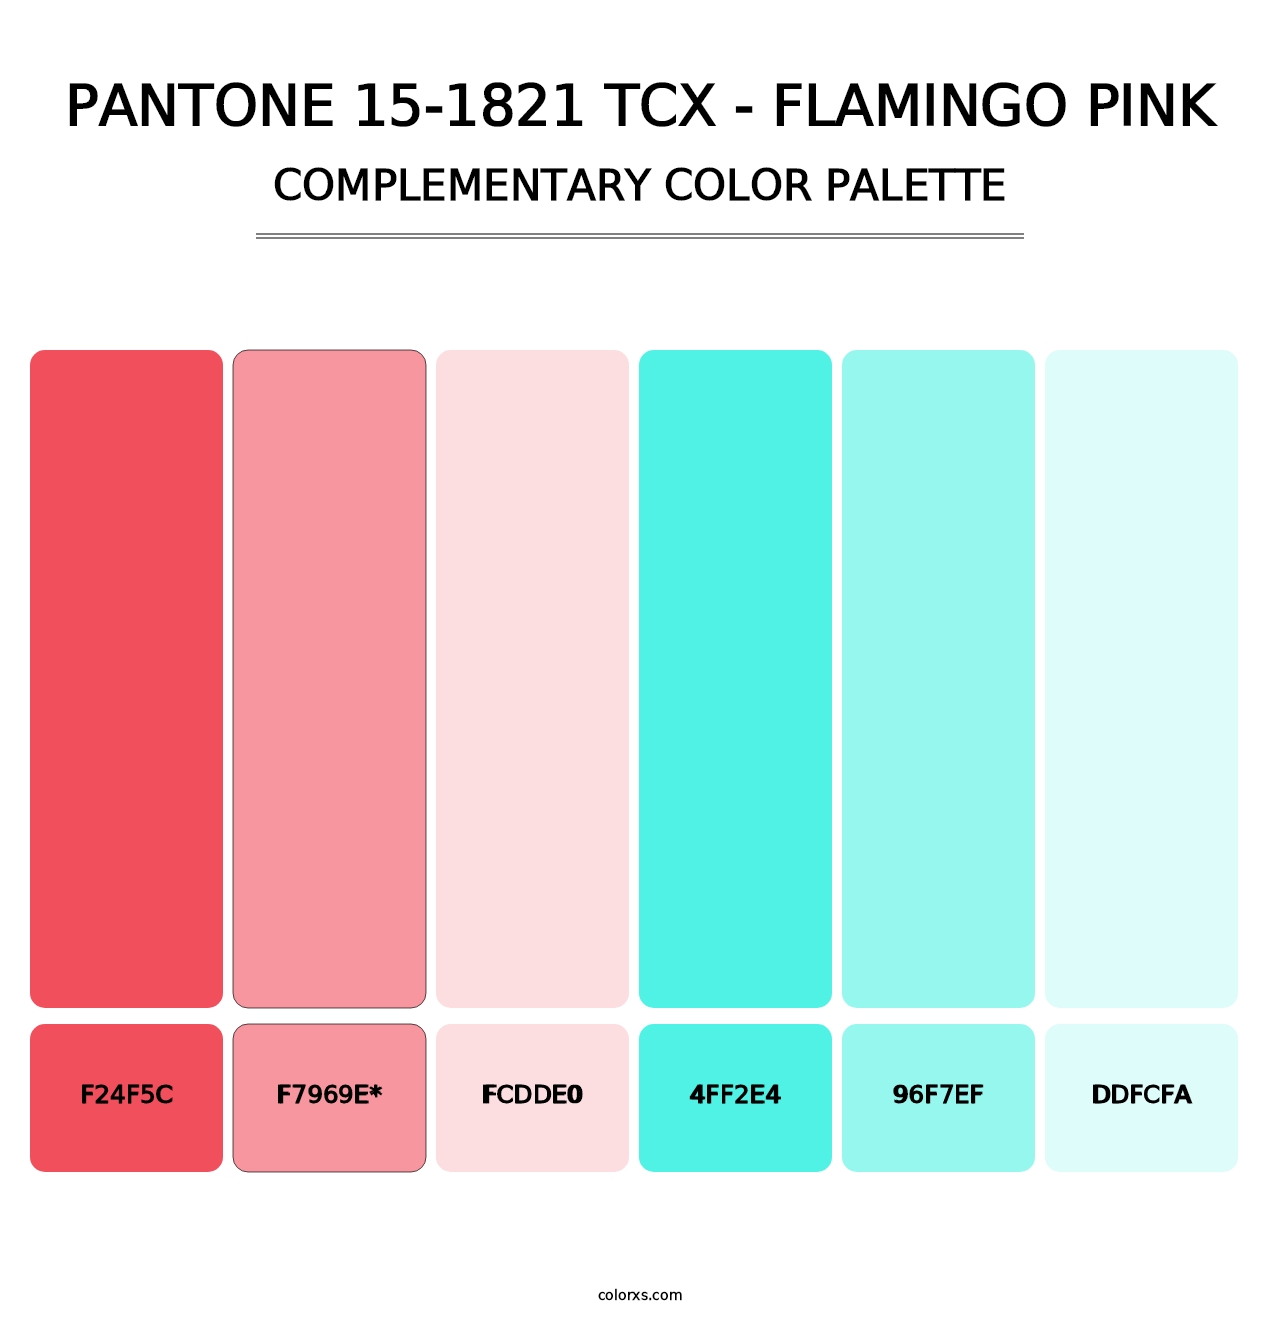 PANTONE 15-1821 TCX - Flamingo Pink - Complementary Color Palette